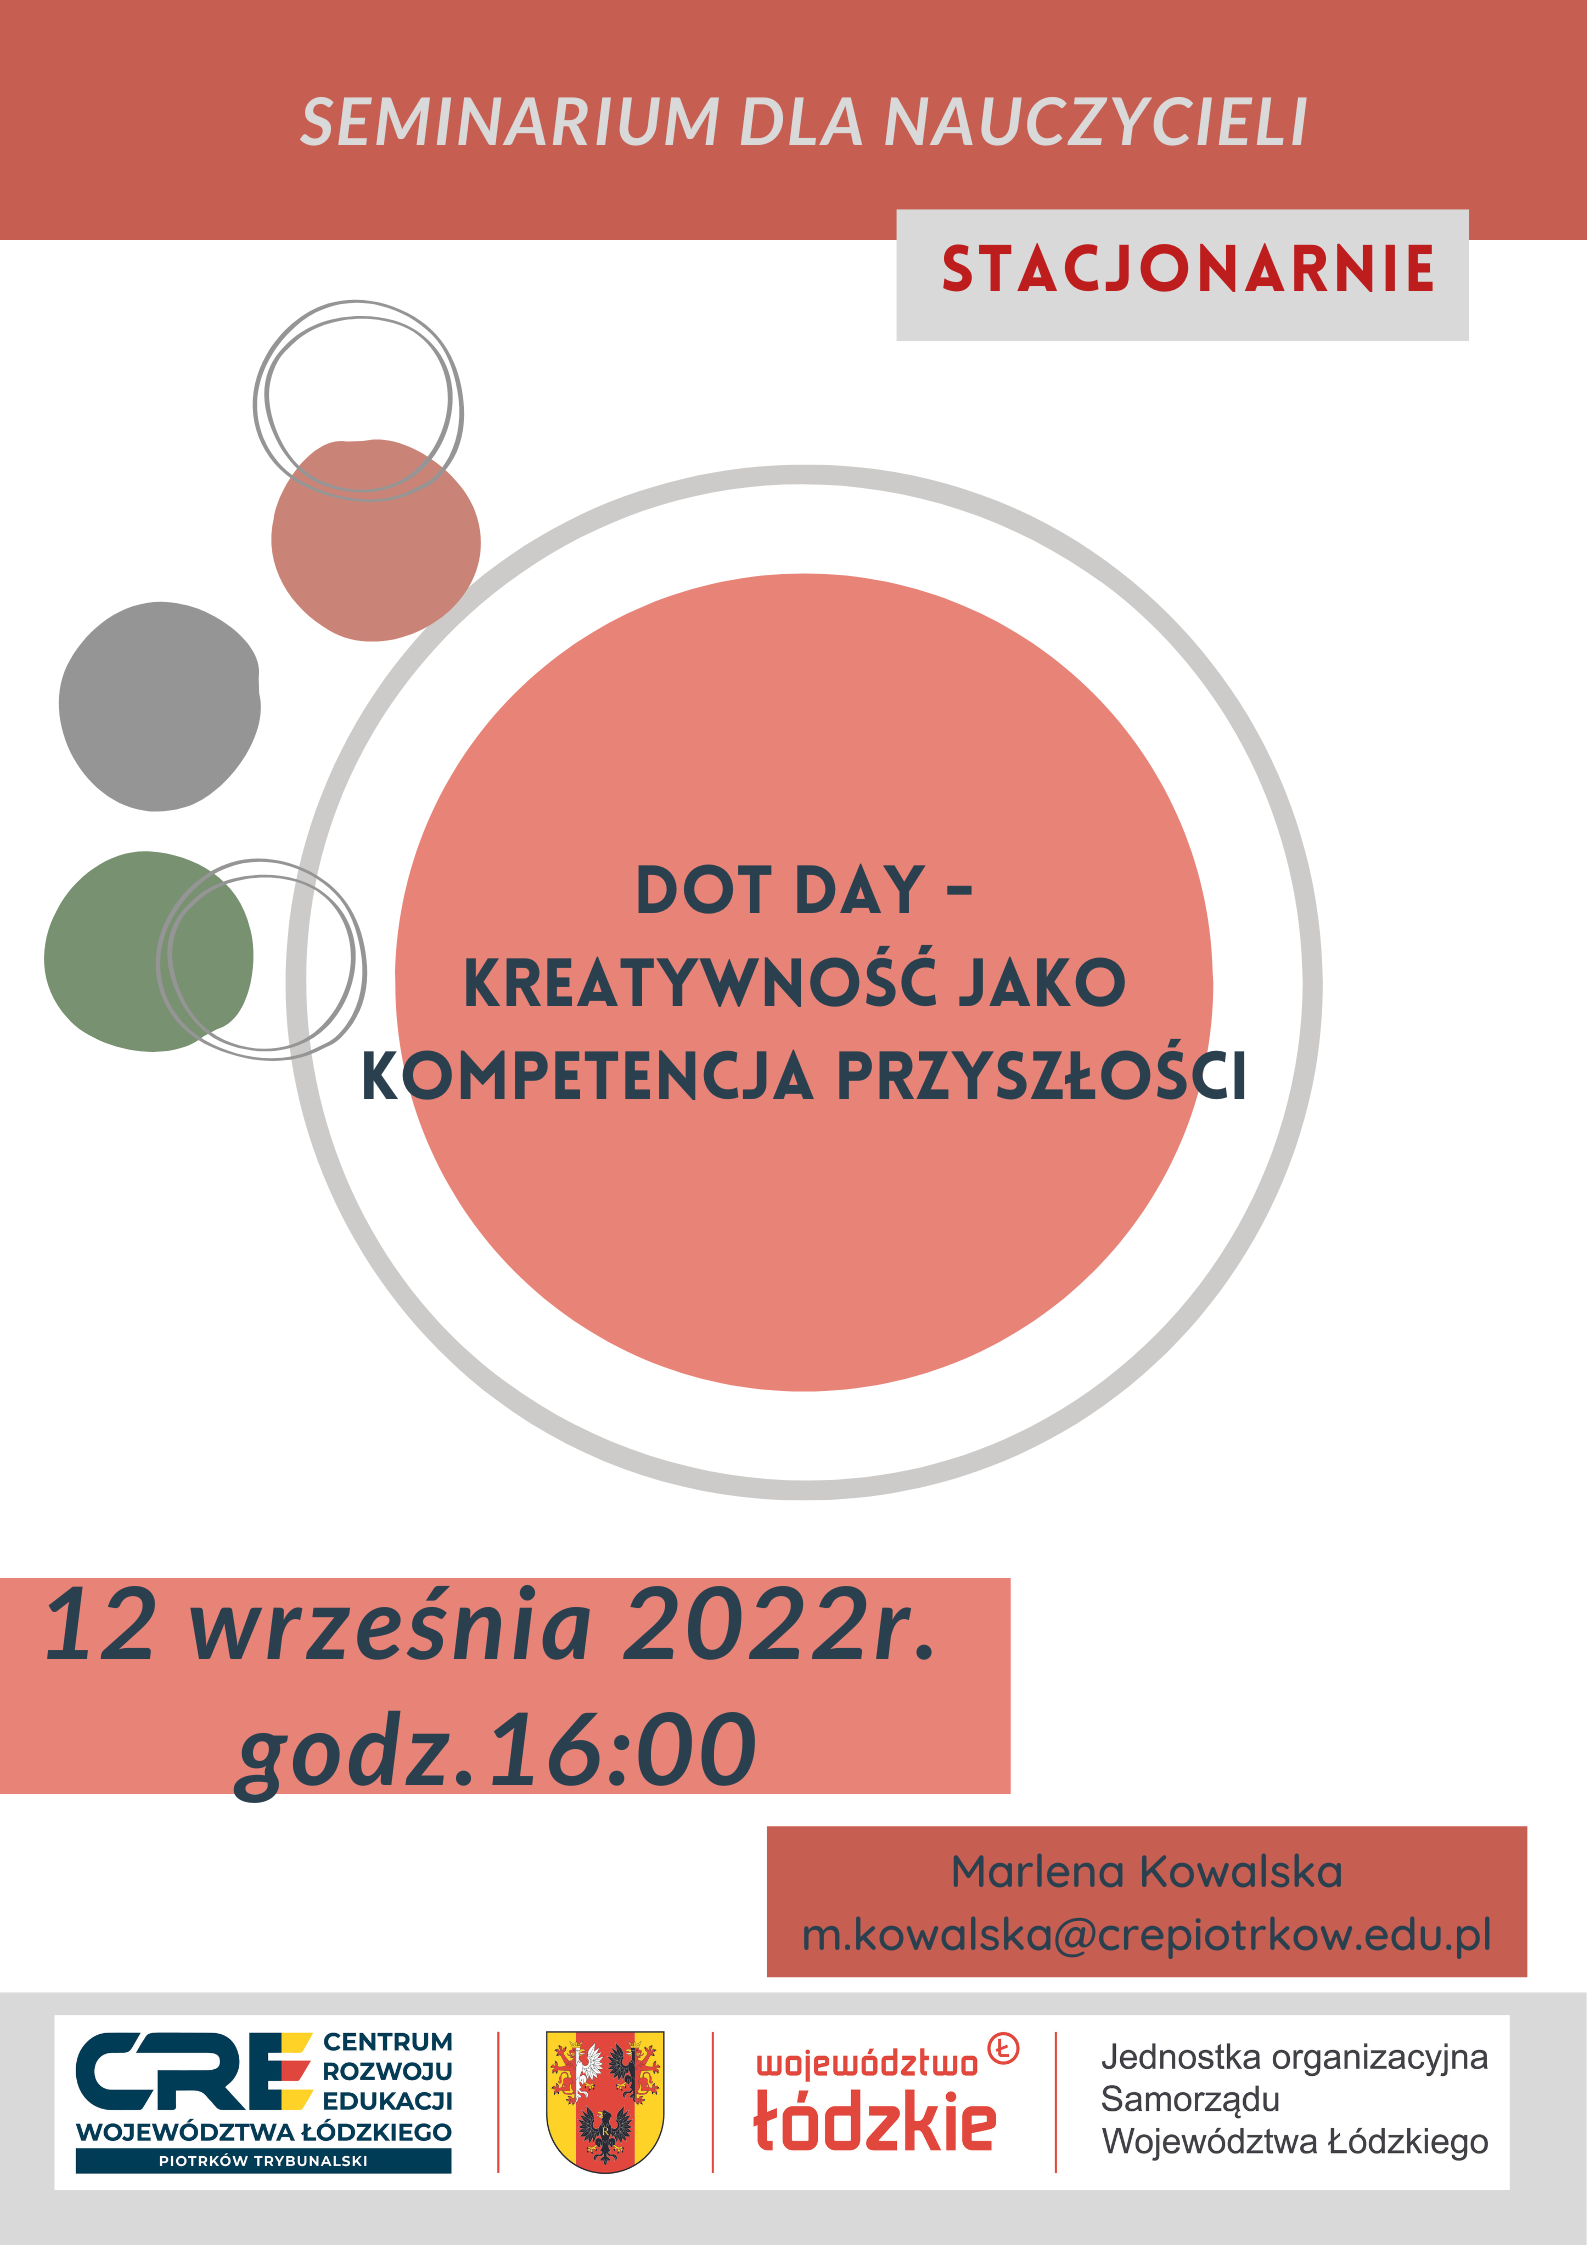 Dot Day 12 września 2022 seminarium